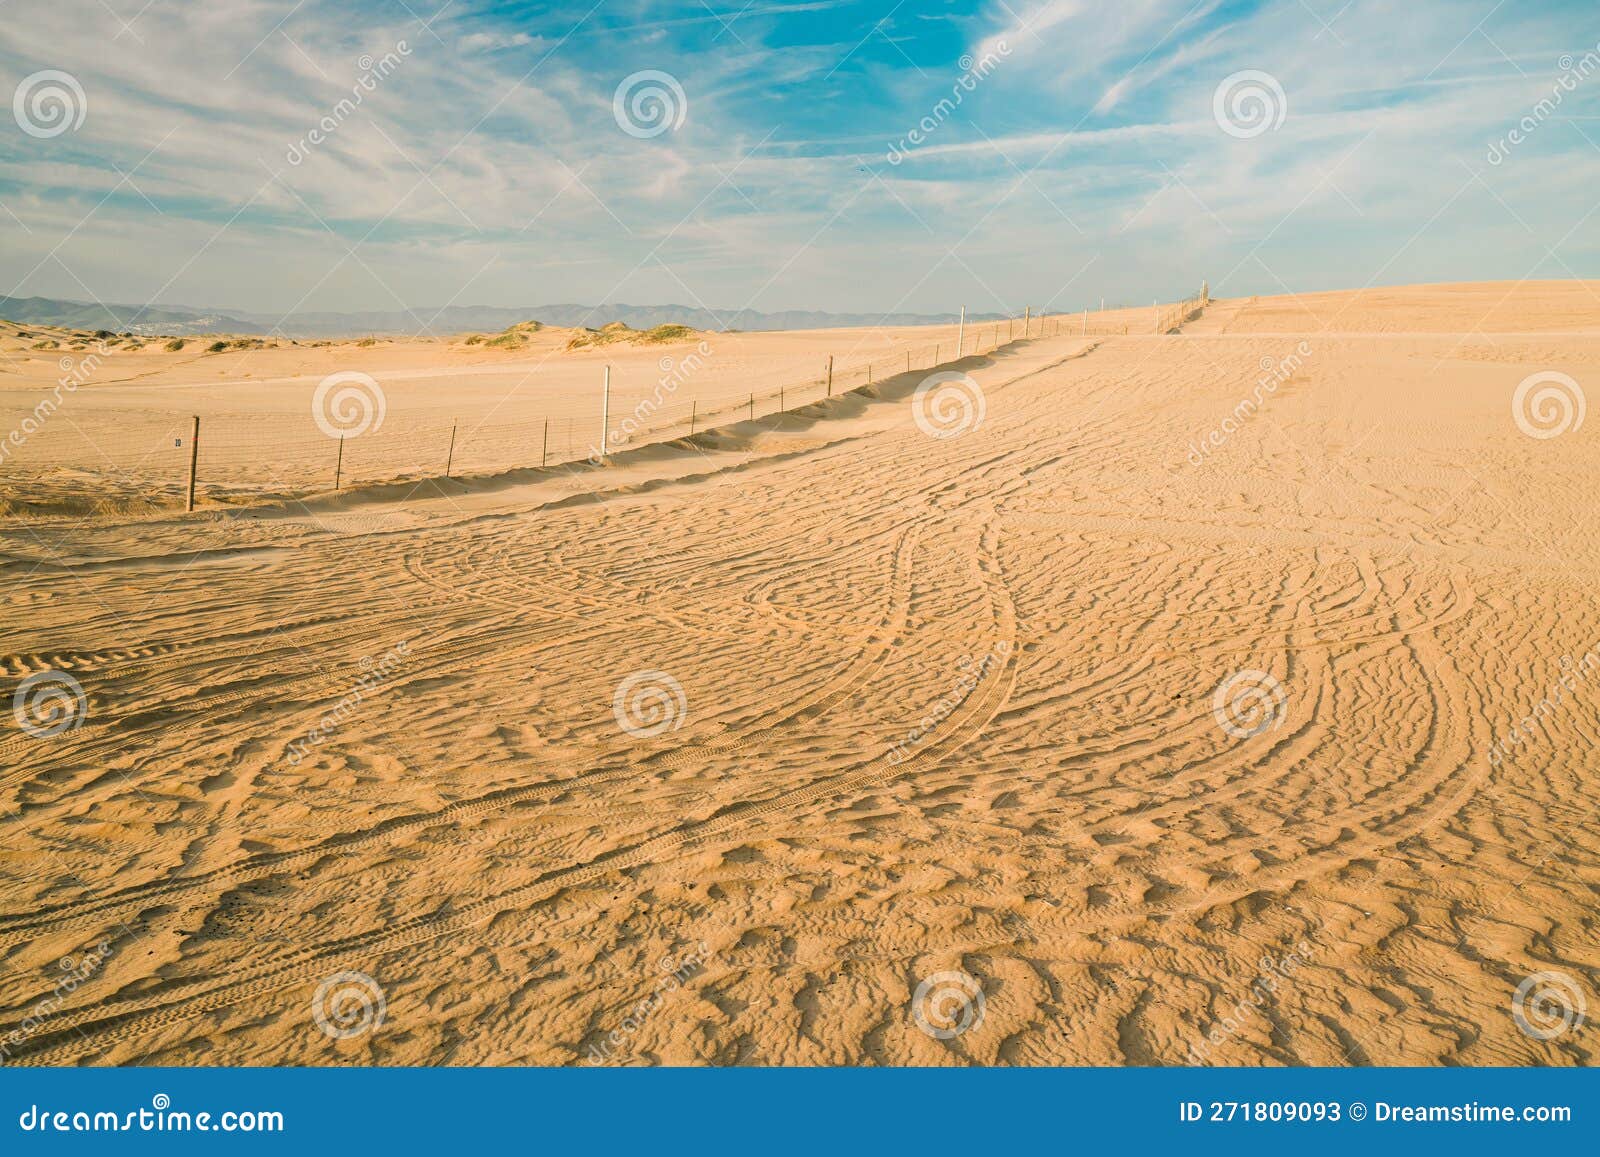 sand dunes and tire tracks on sand, oceano, california